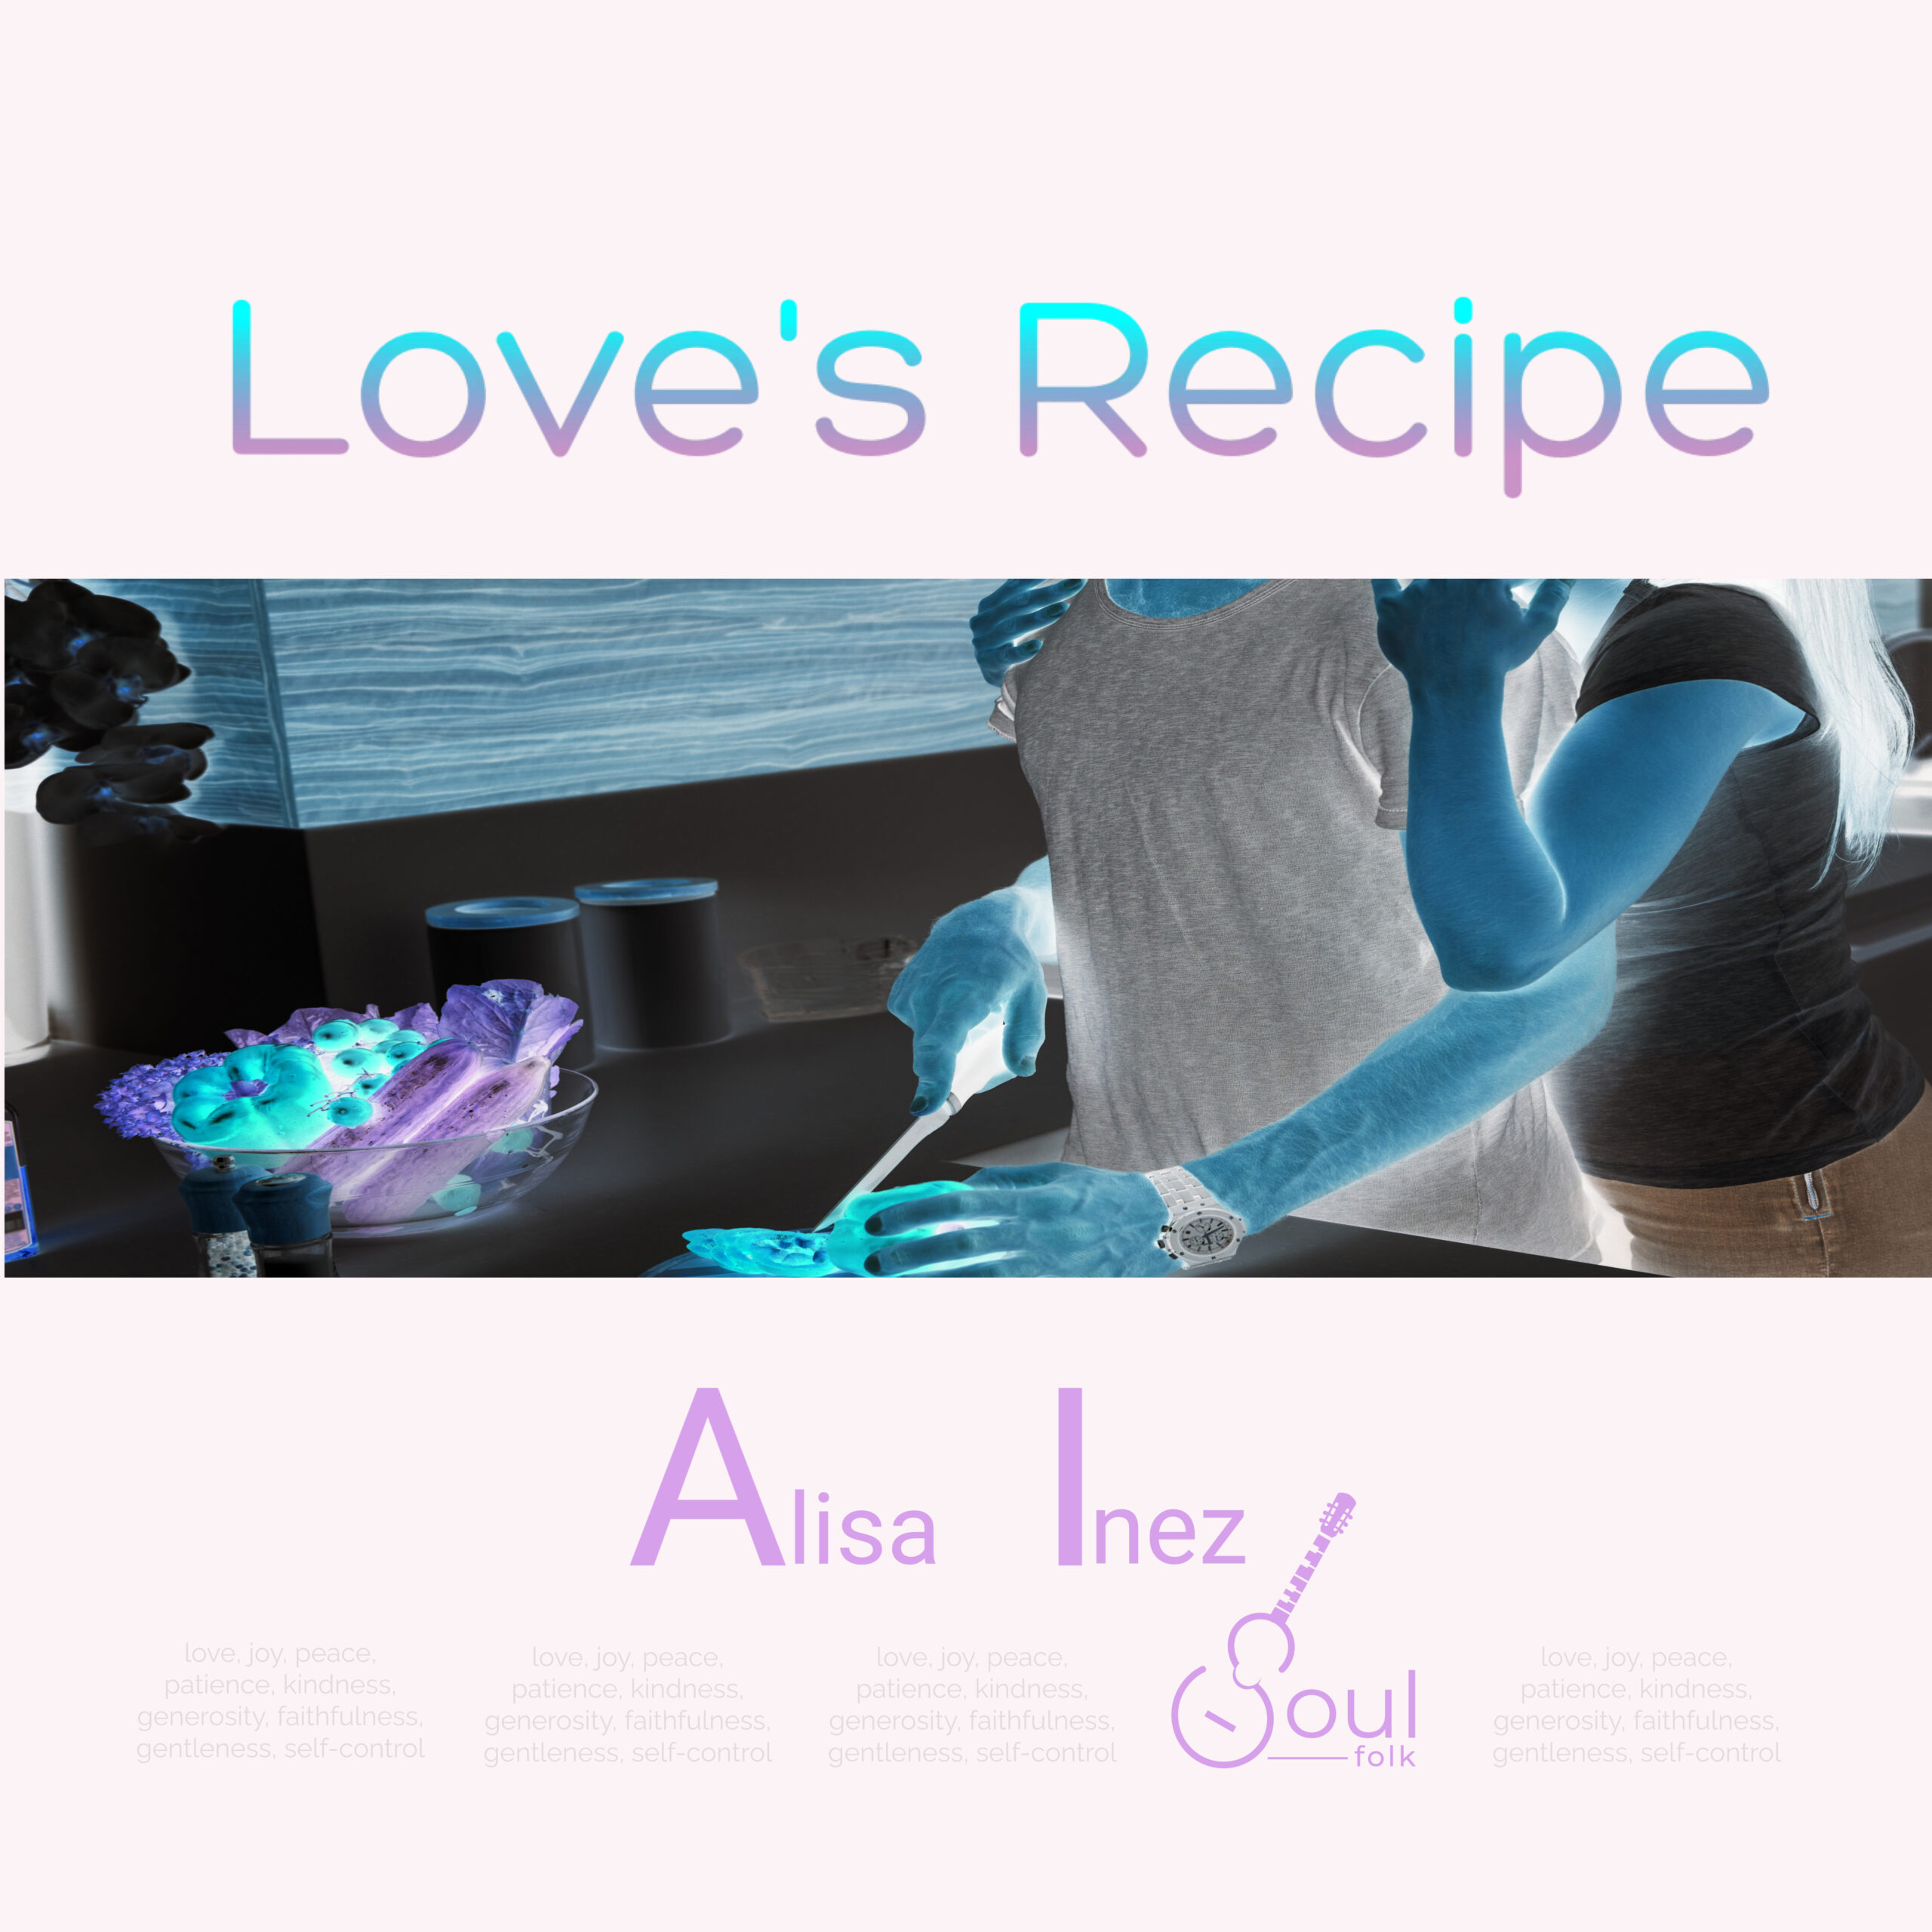 Alisa Inez's Love’s Recipe art cover